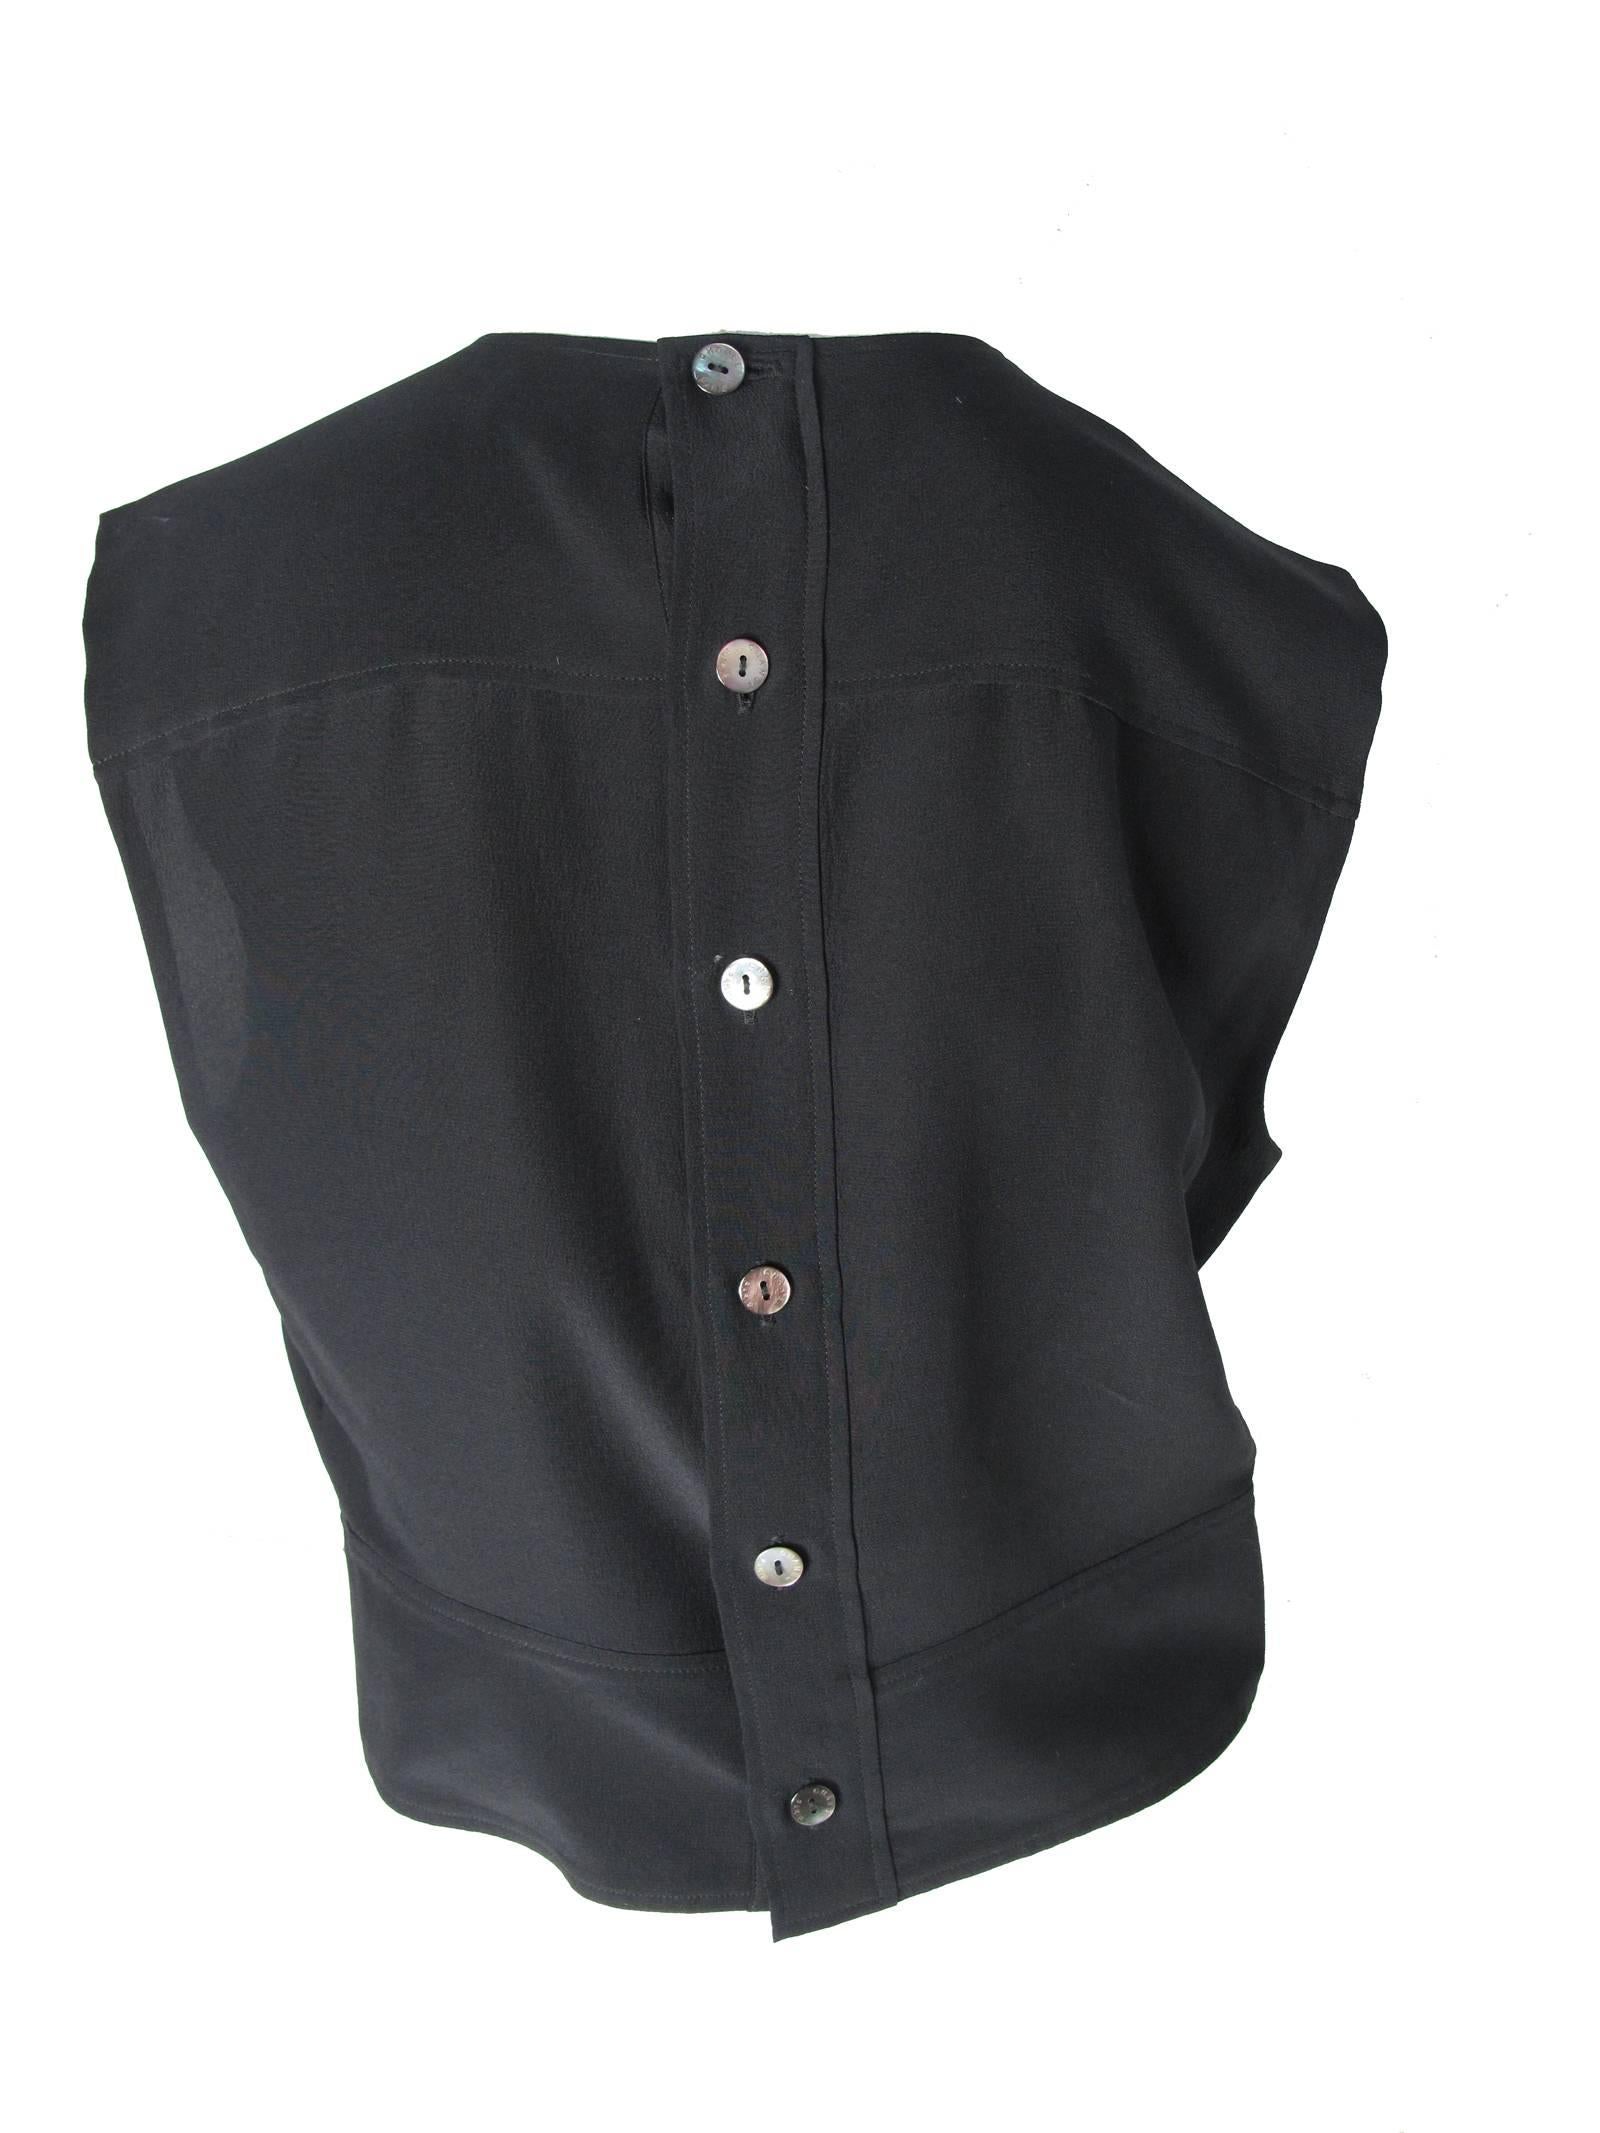 Black Chanel Sleeveless Silk Top with Collar